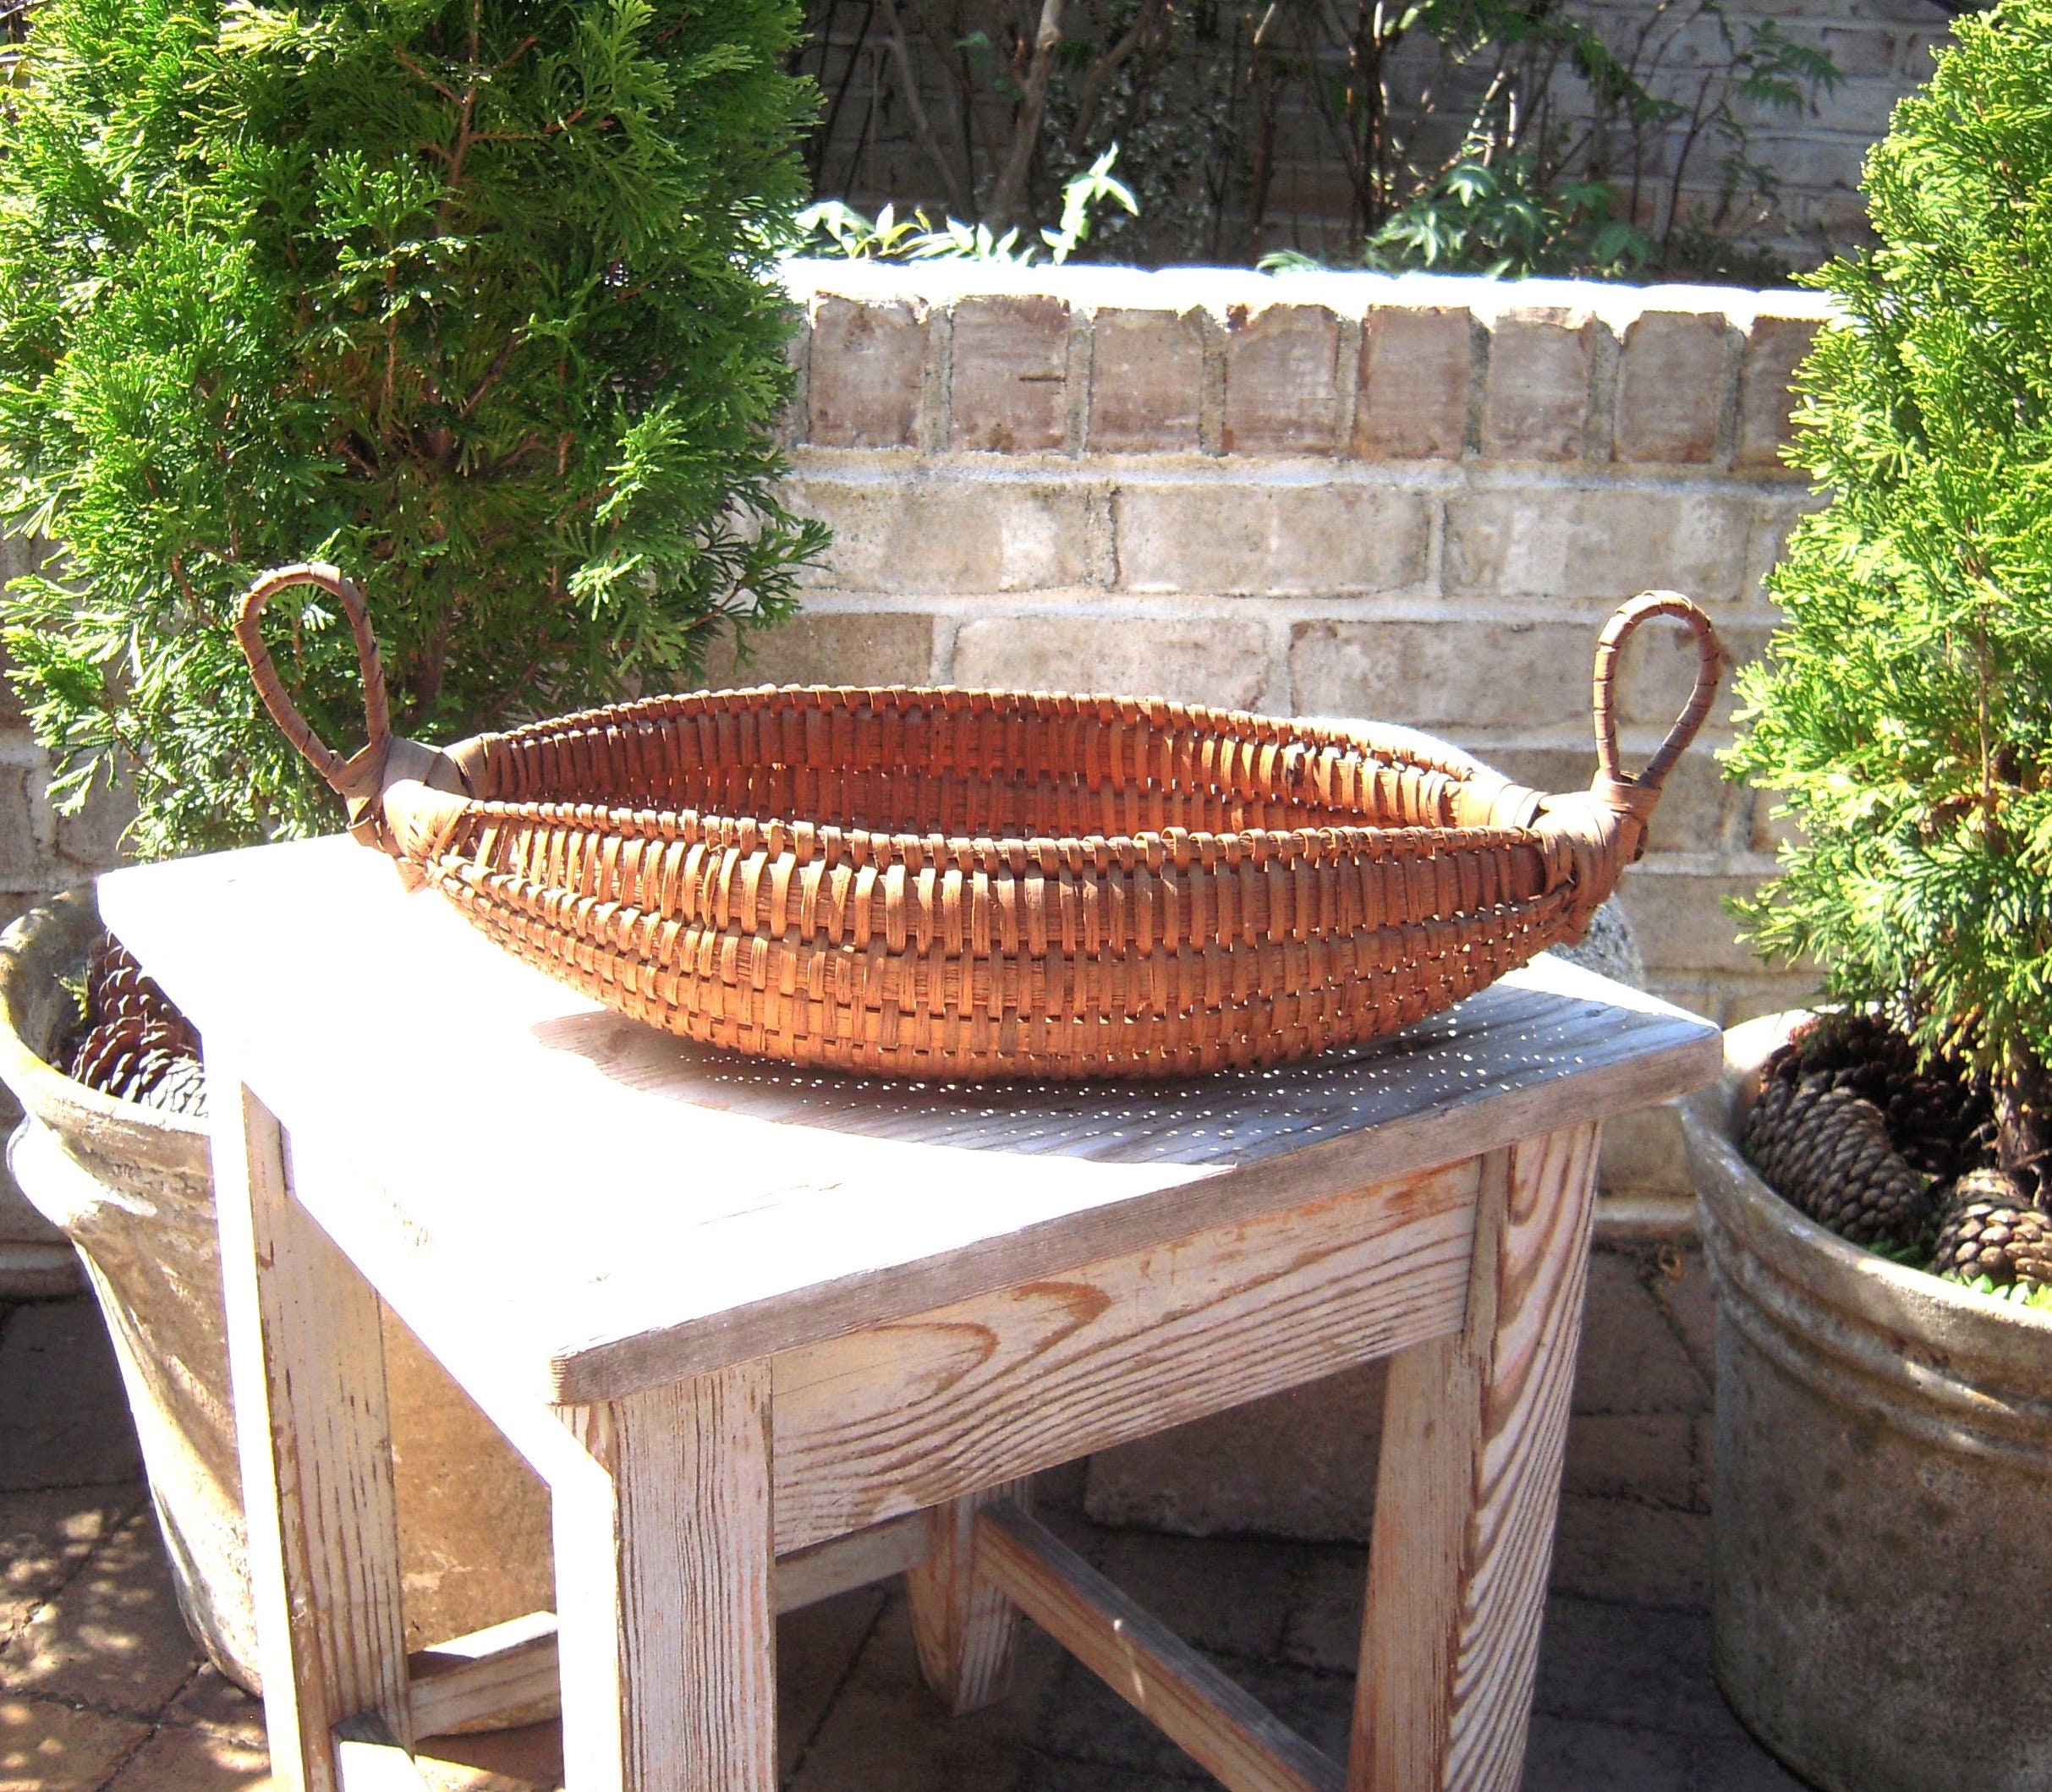 Child's Gondola Basket / Small wicker shopping basket with handle – Carla's  Treasure